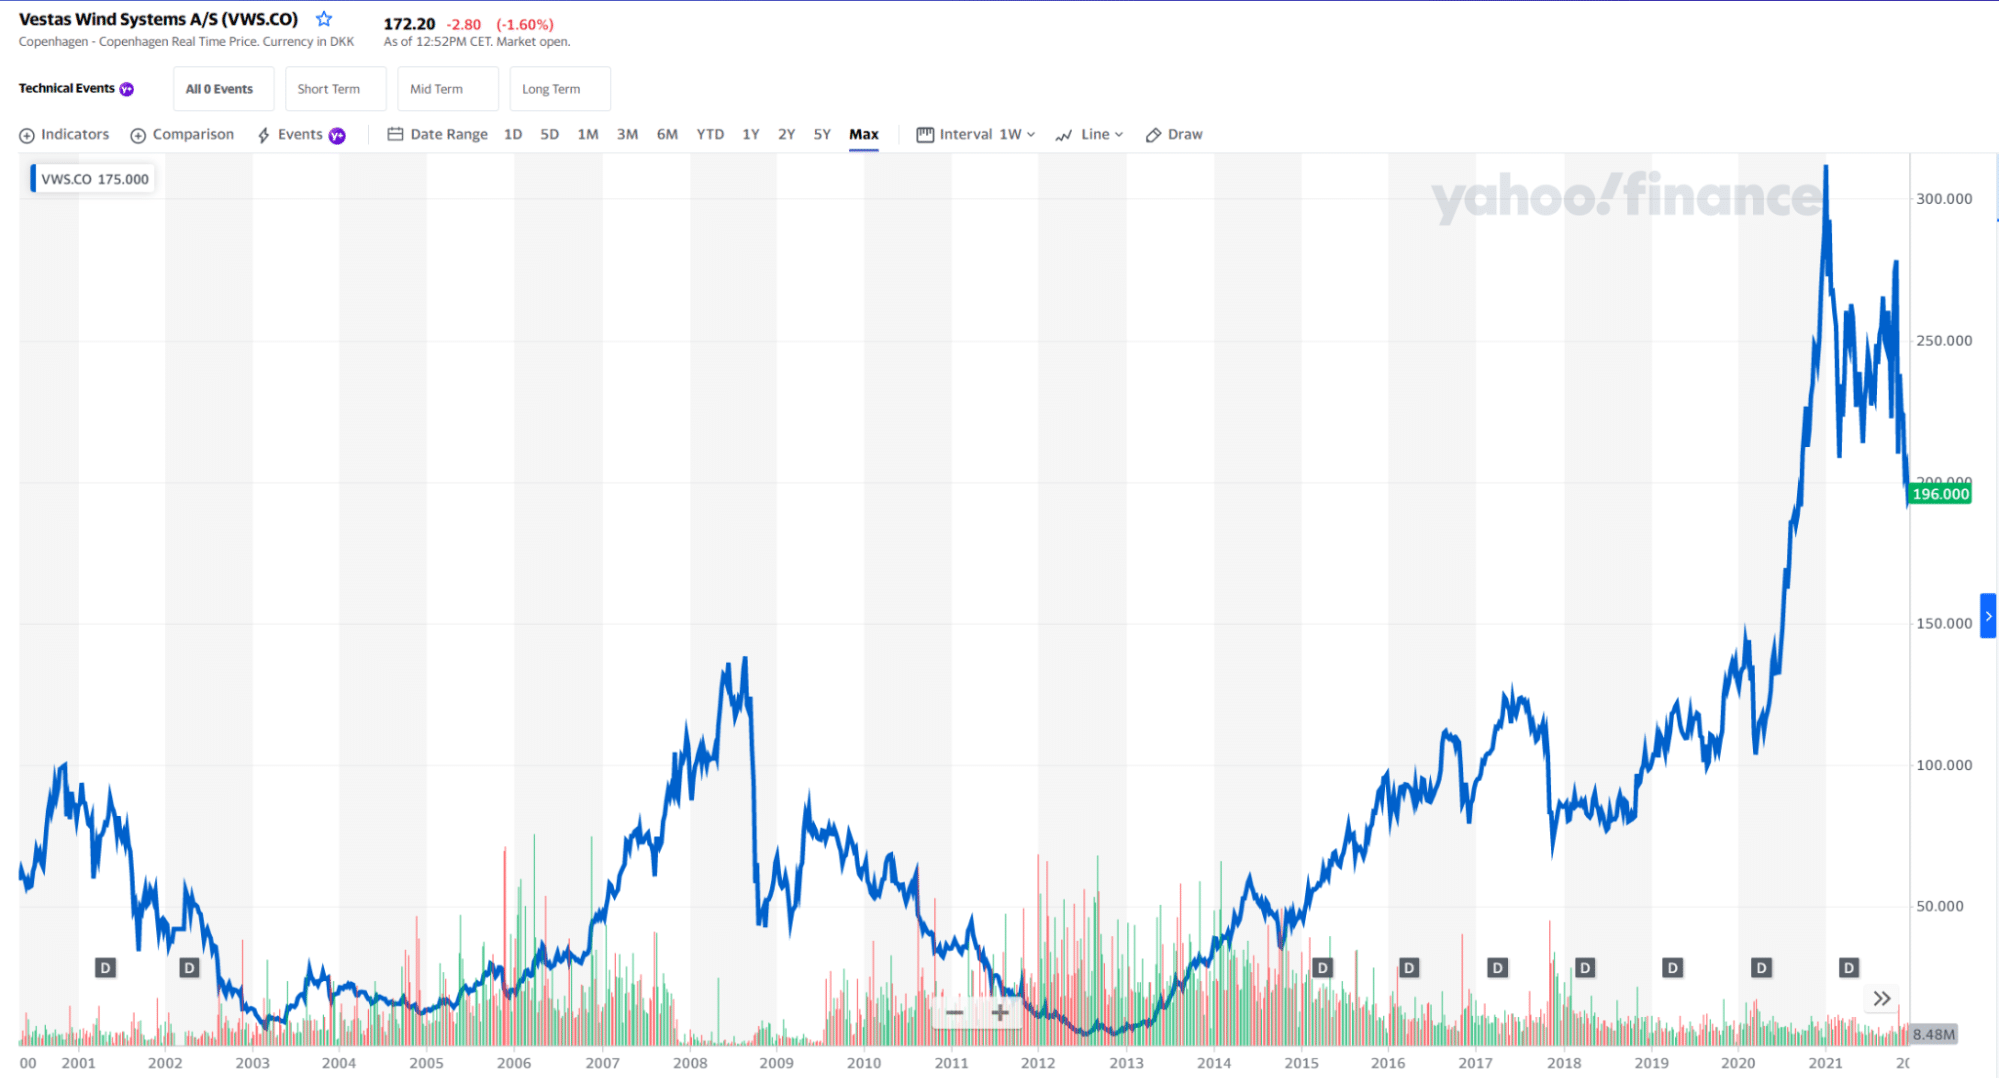 VWS.CO price chart 2001-2022